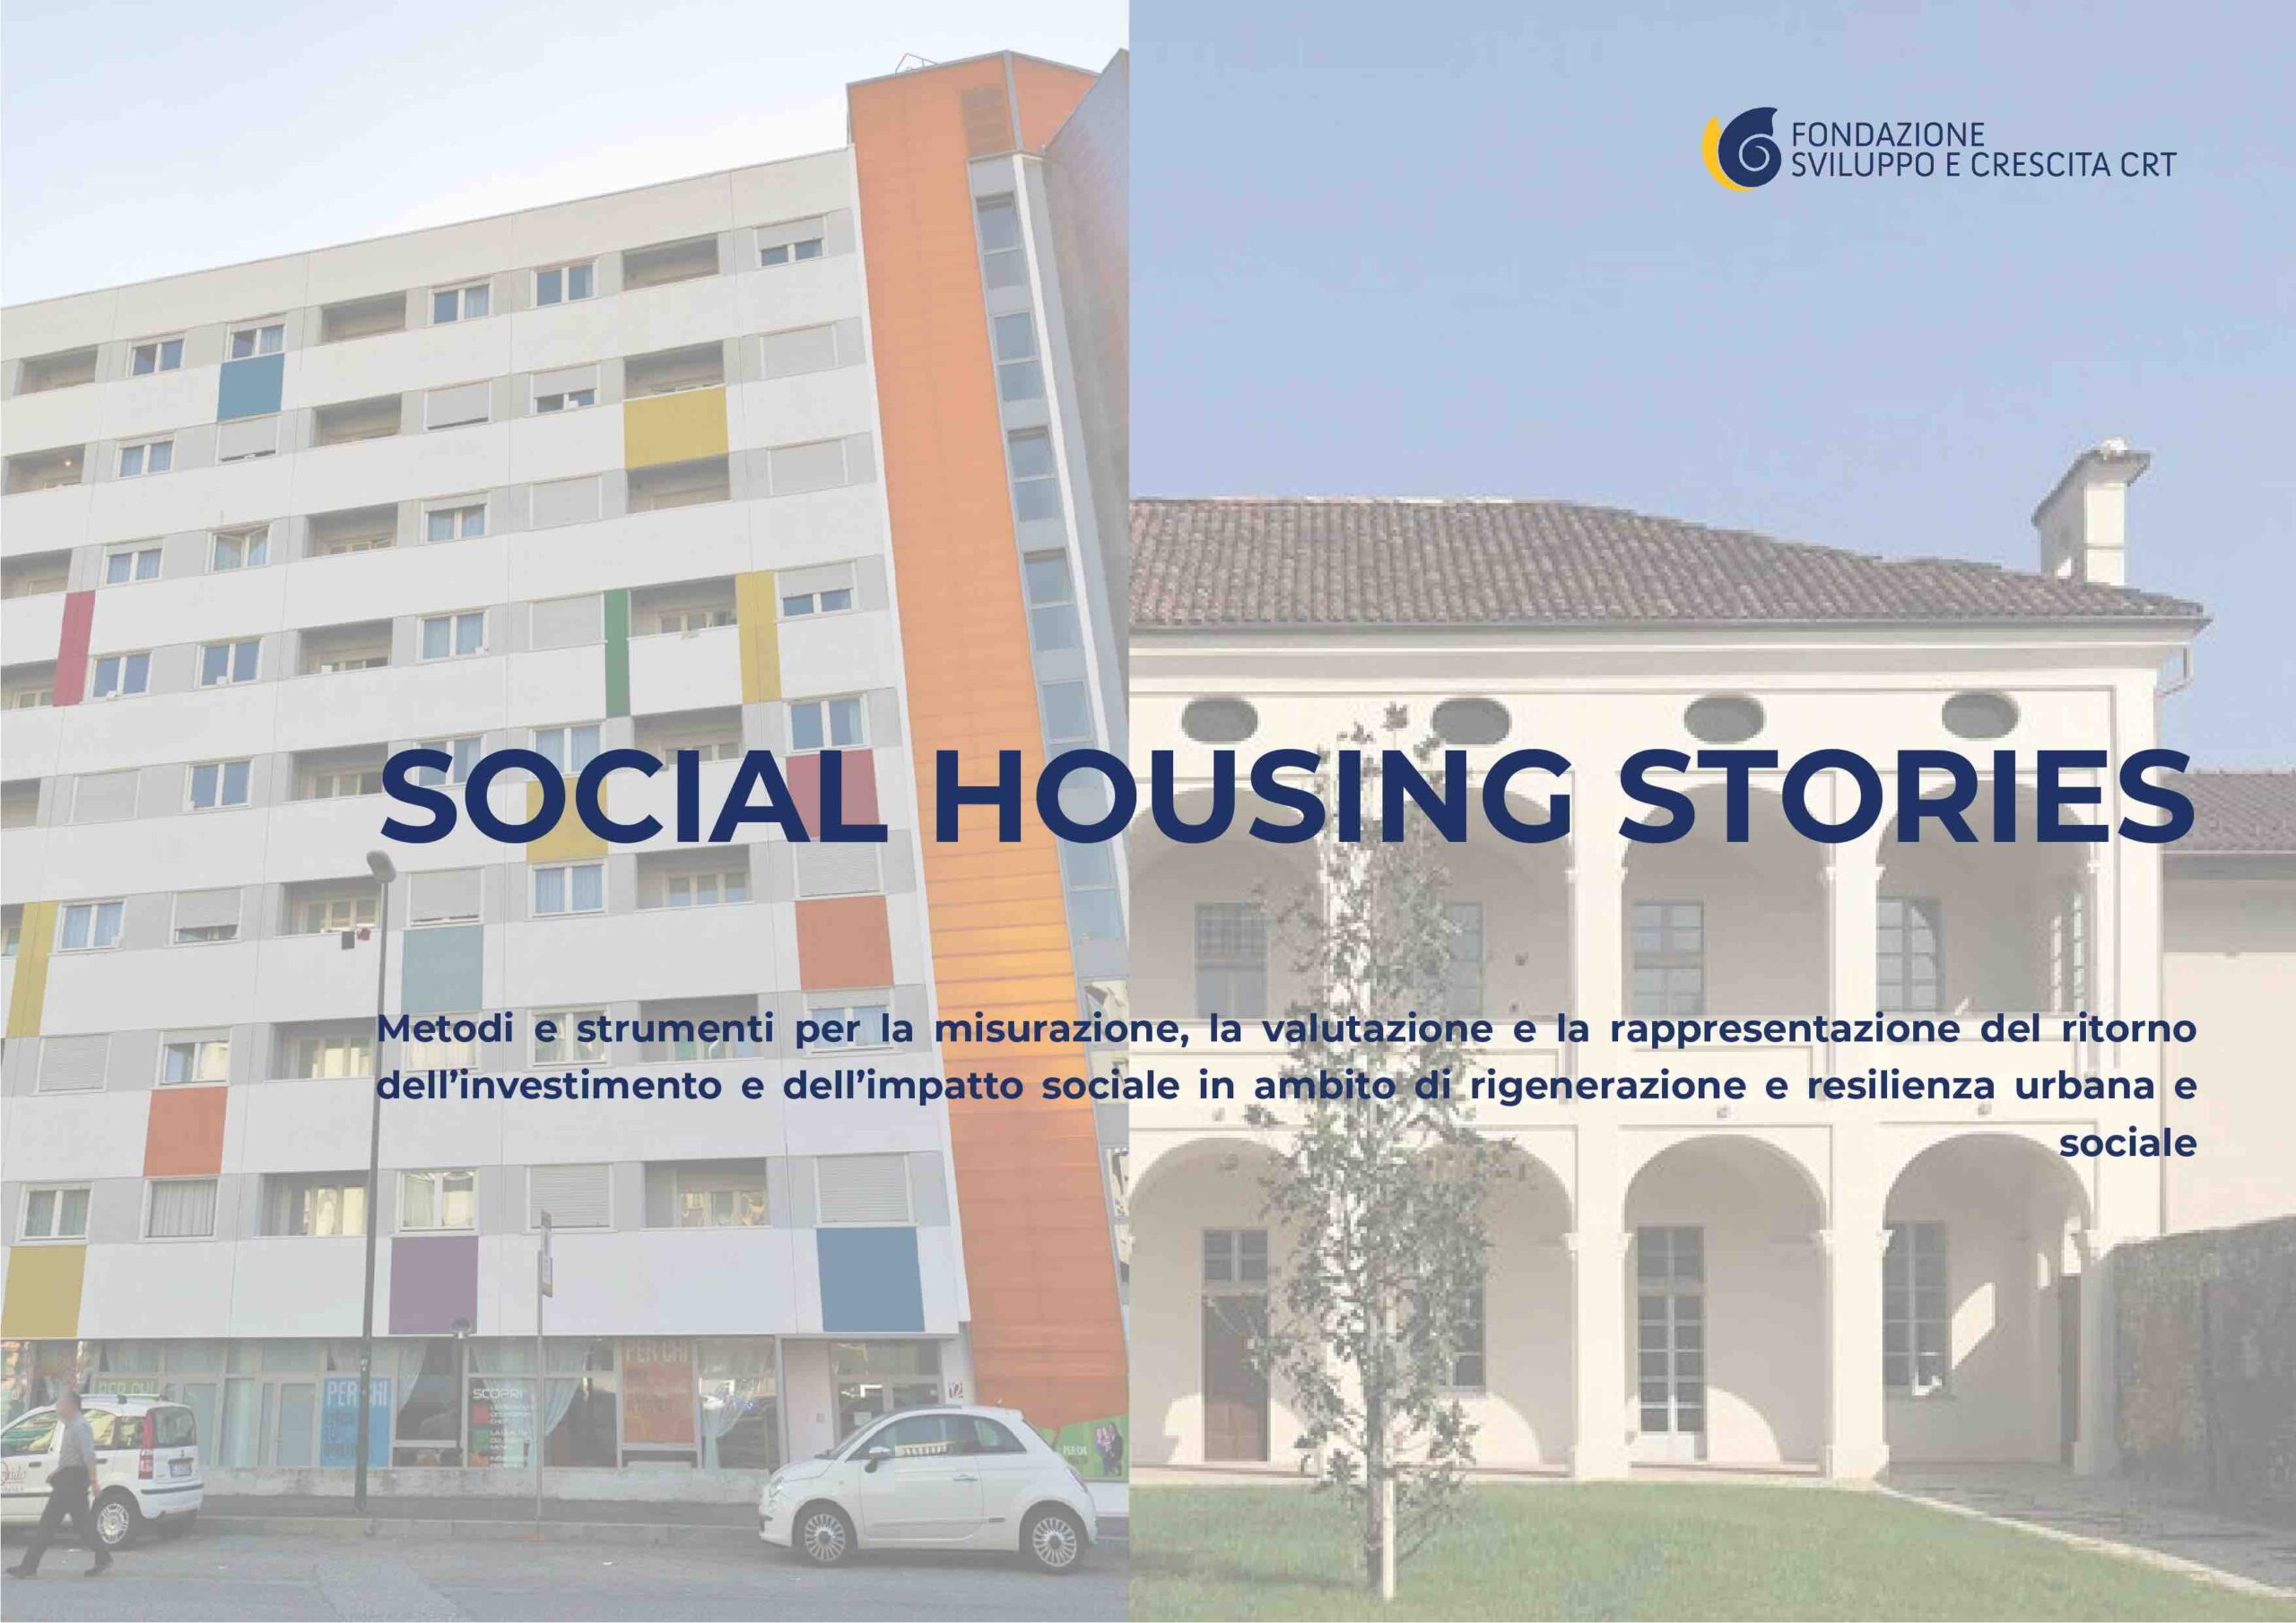 Social housing stories